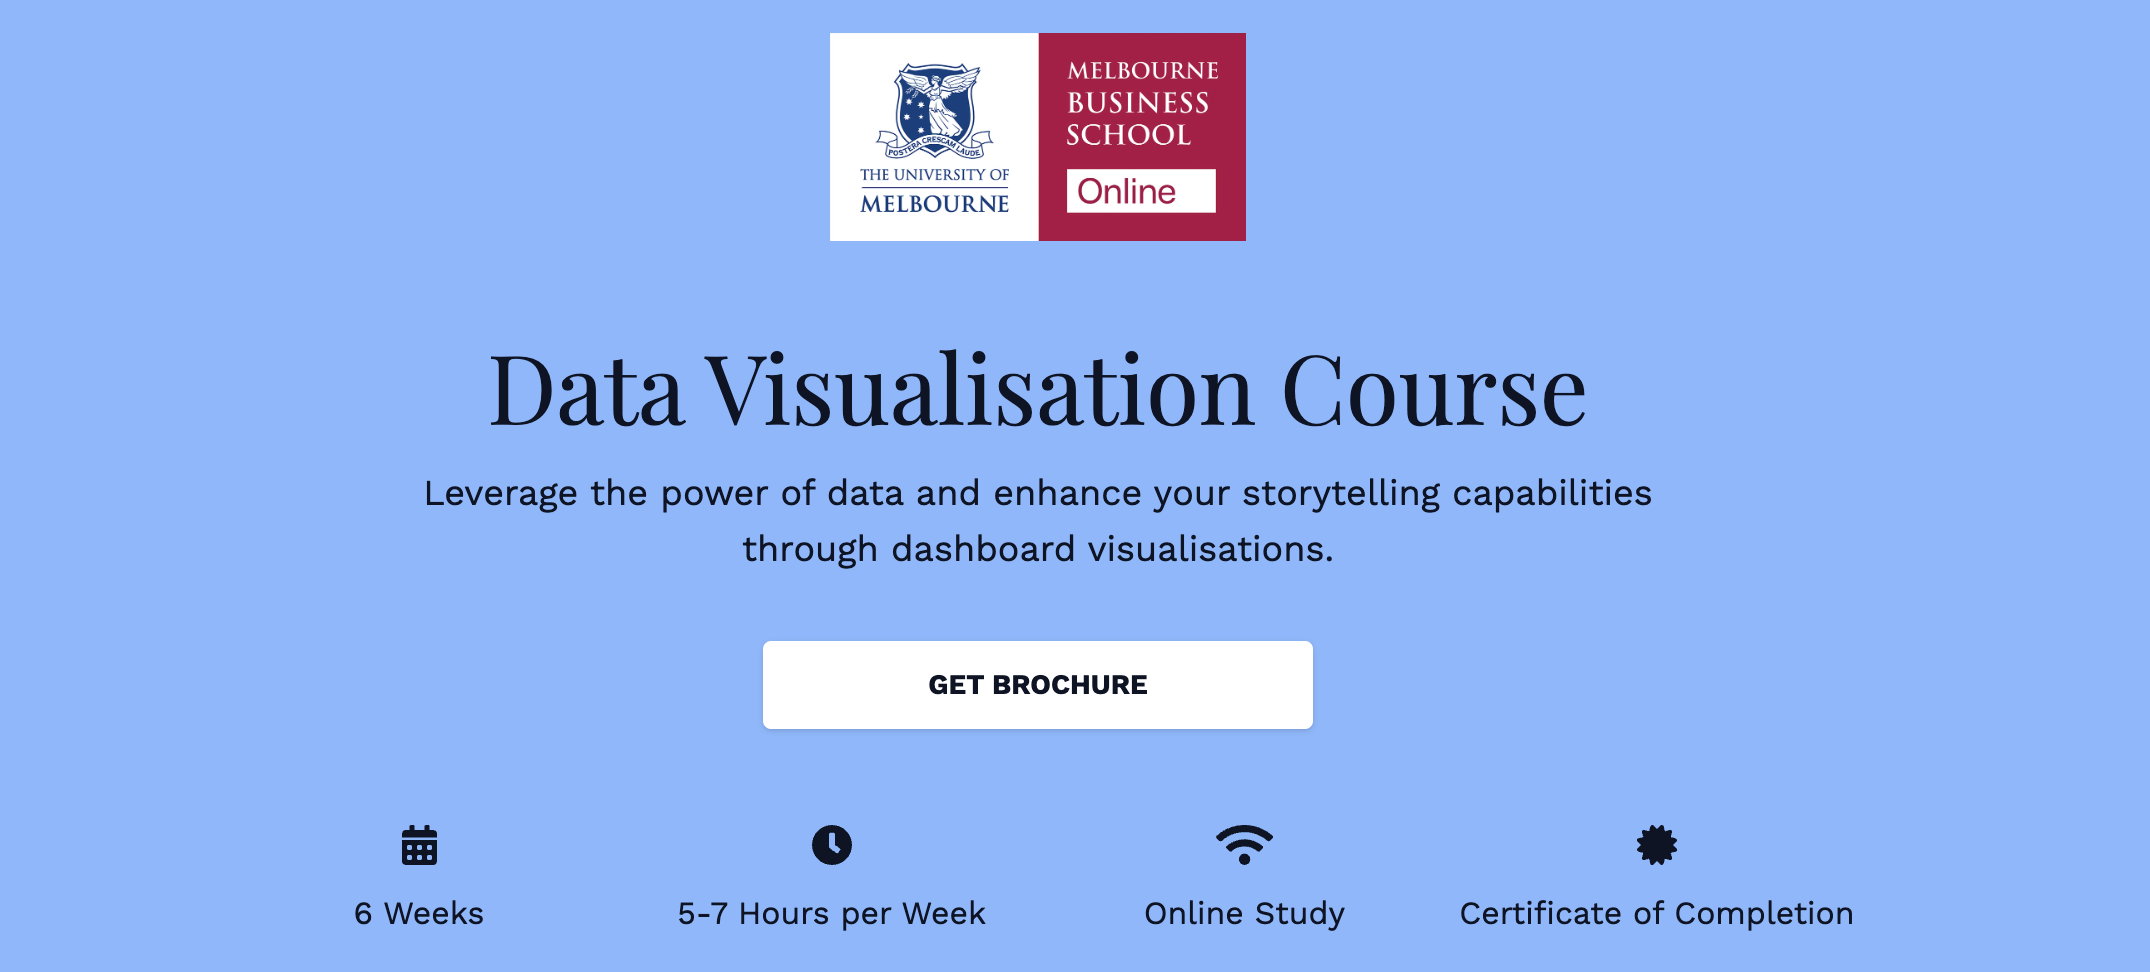 Data visualisation course